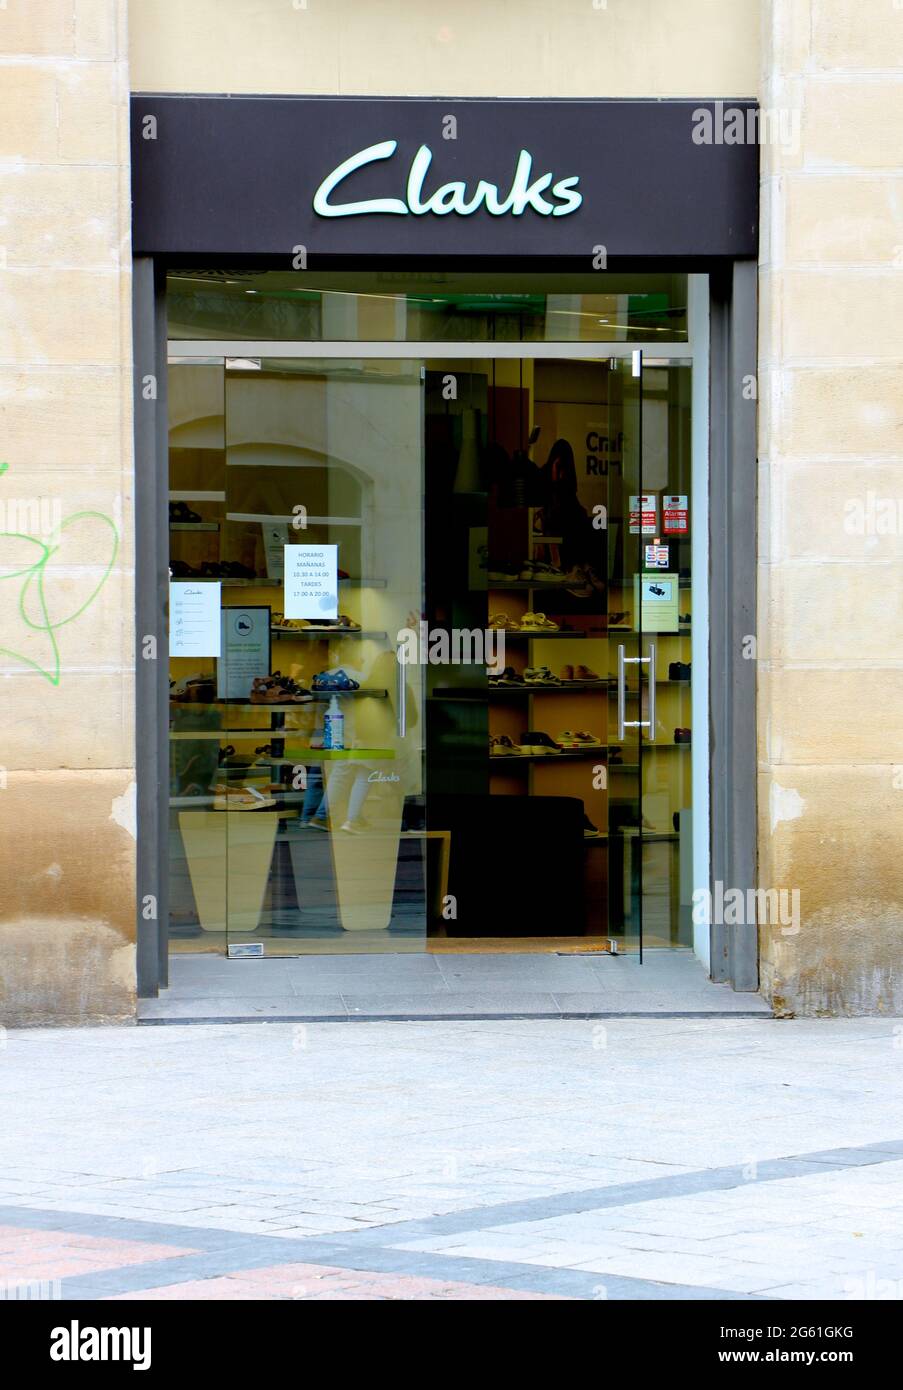 C. & J. Clark International Ltd known as Clarks shoe retailer shop sign and  shop entrance Zaragoza Aragon Spain Stock Photo - Alamy